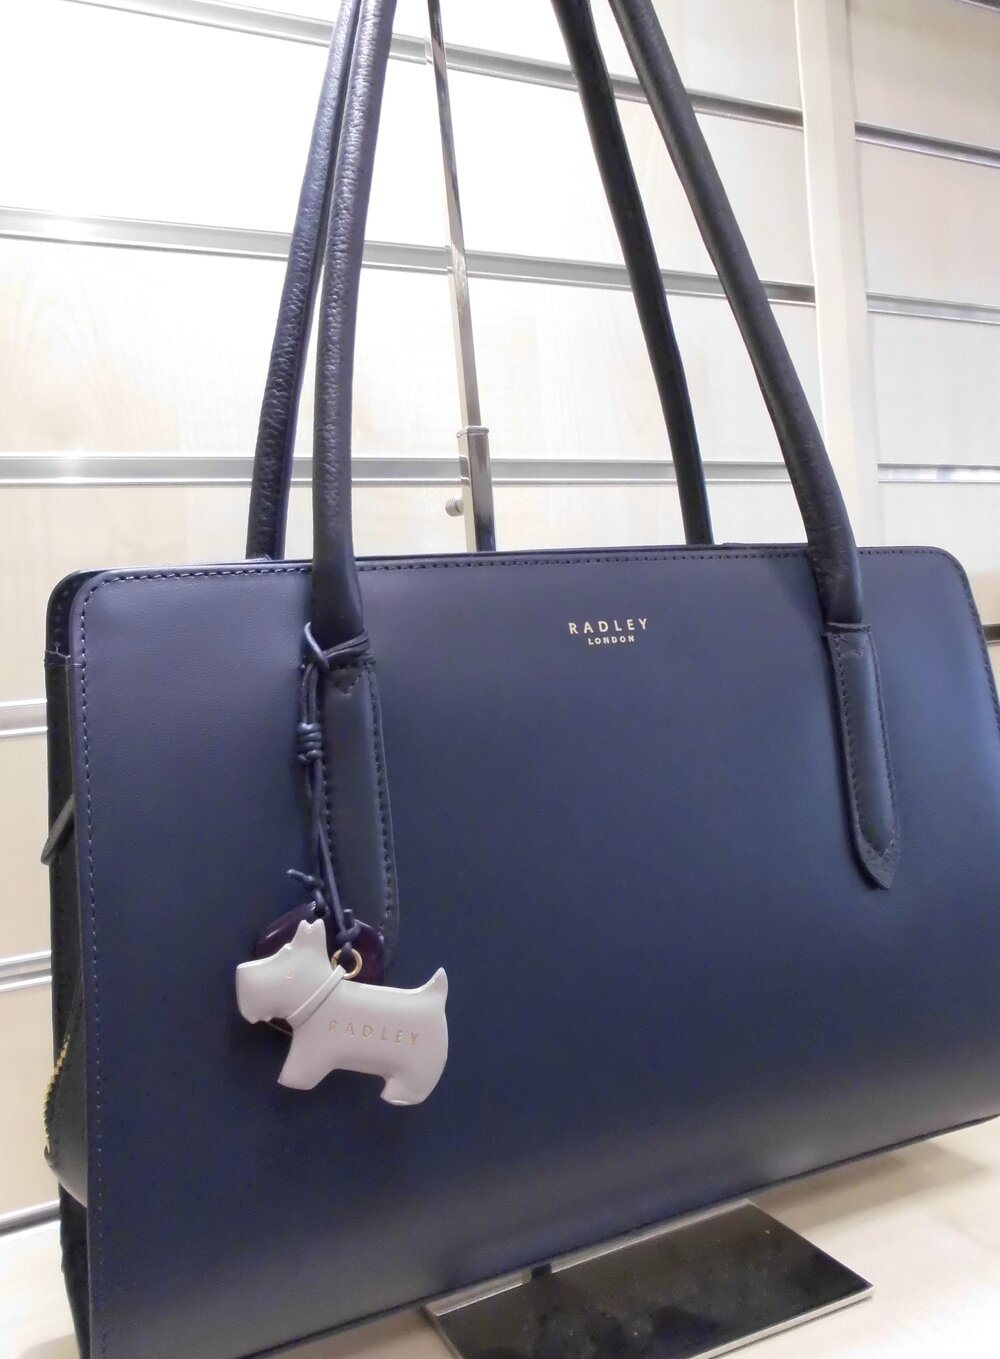 Radley Handbags : Bags & Accessories 